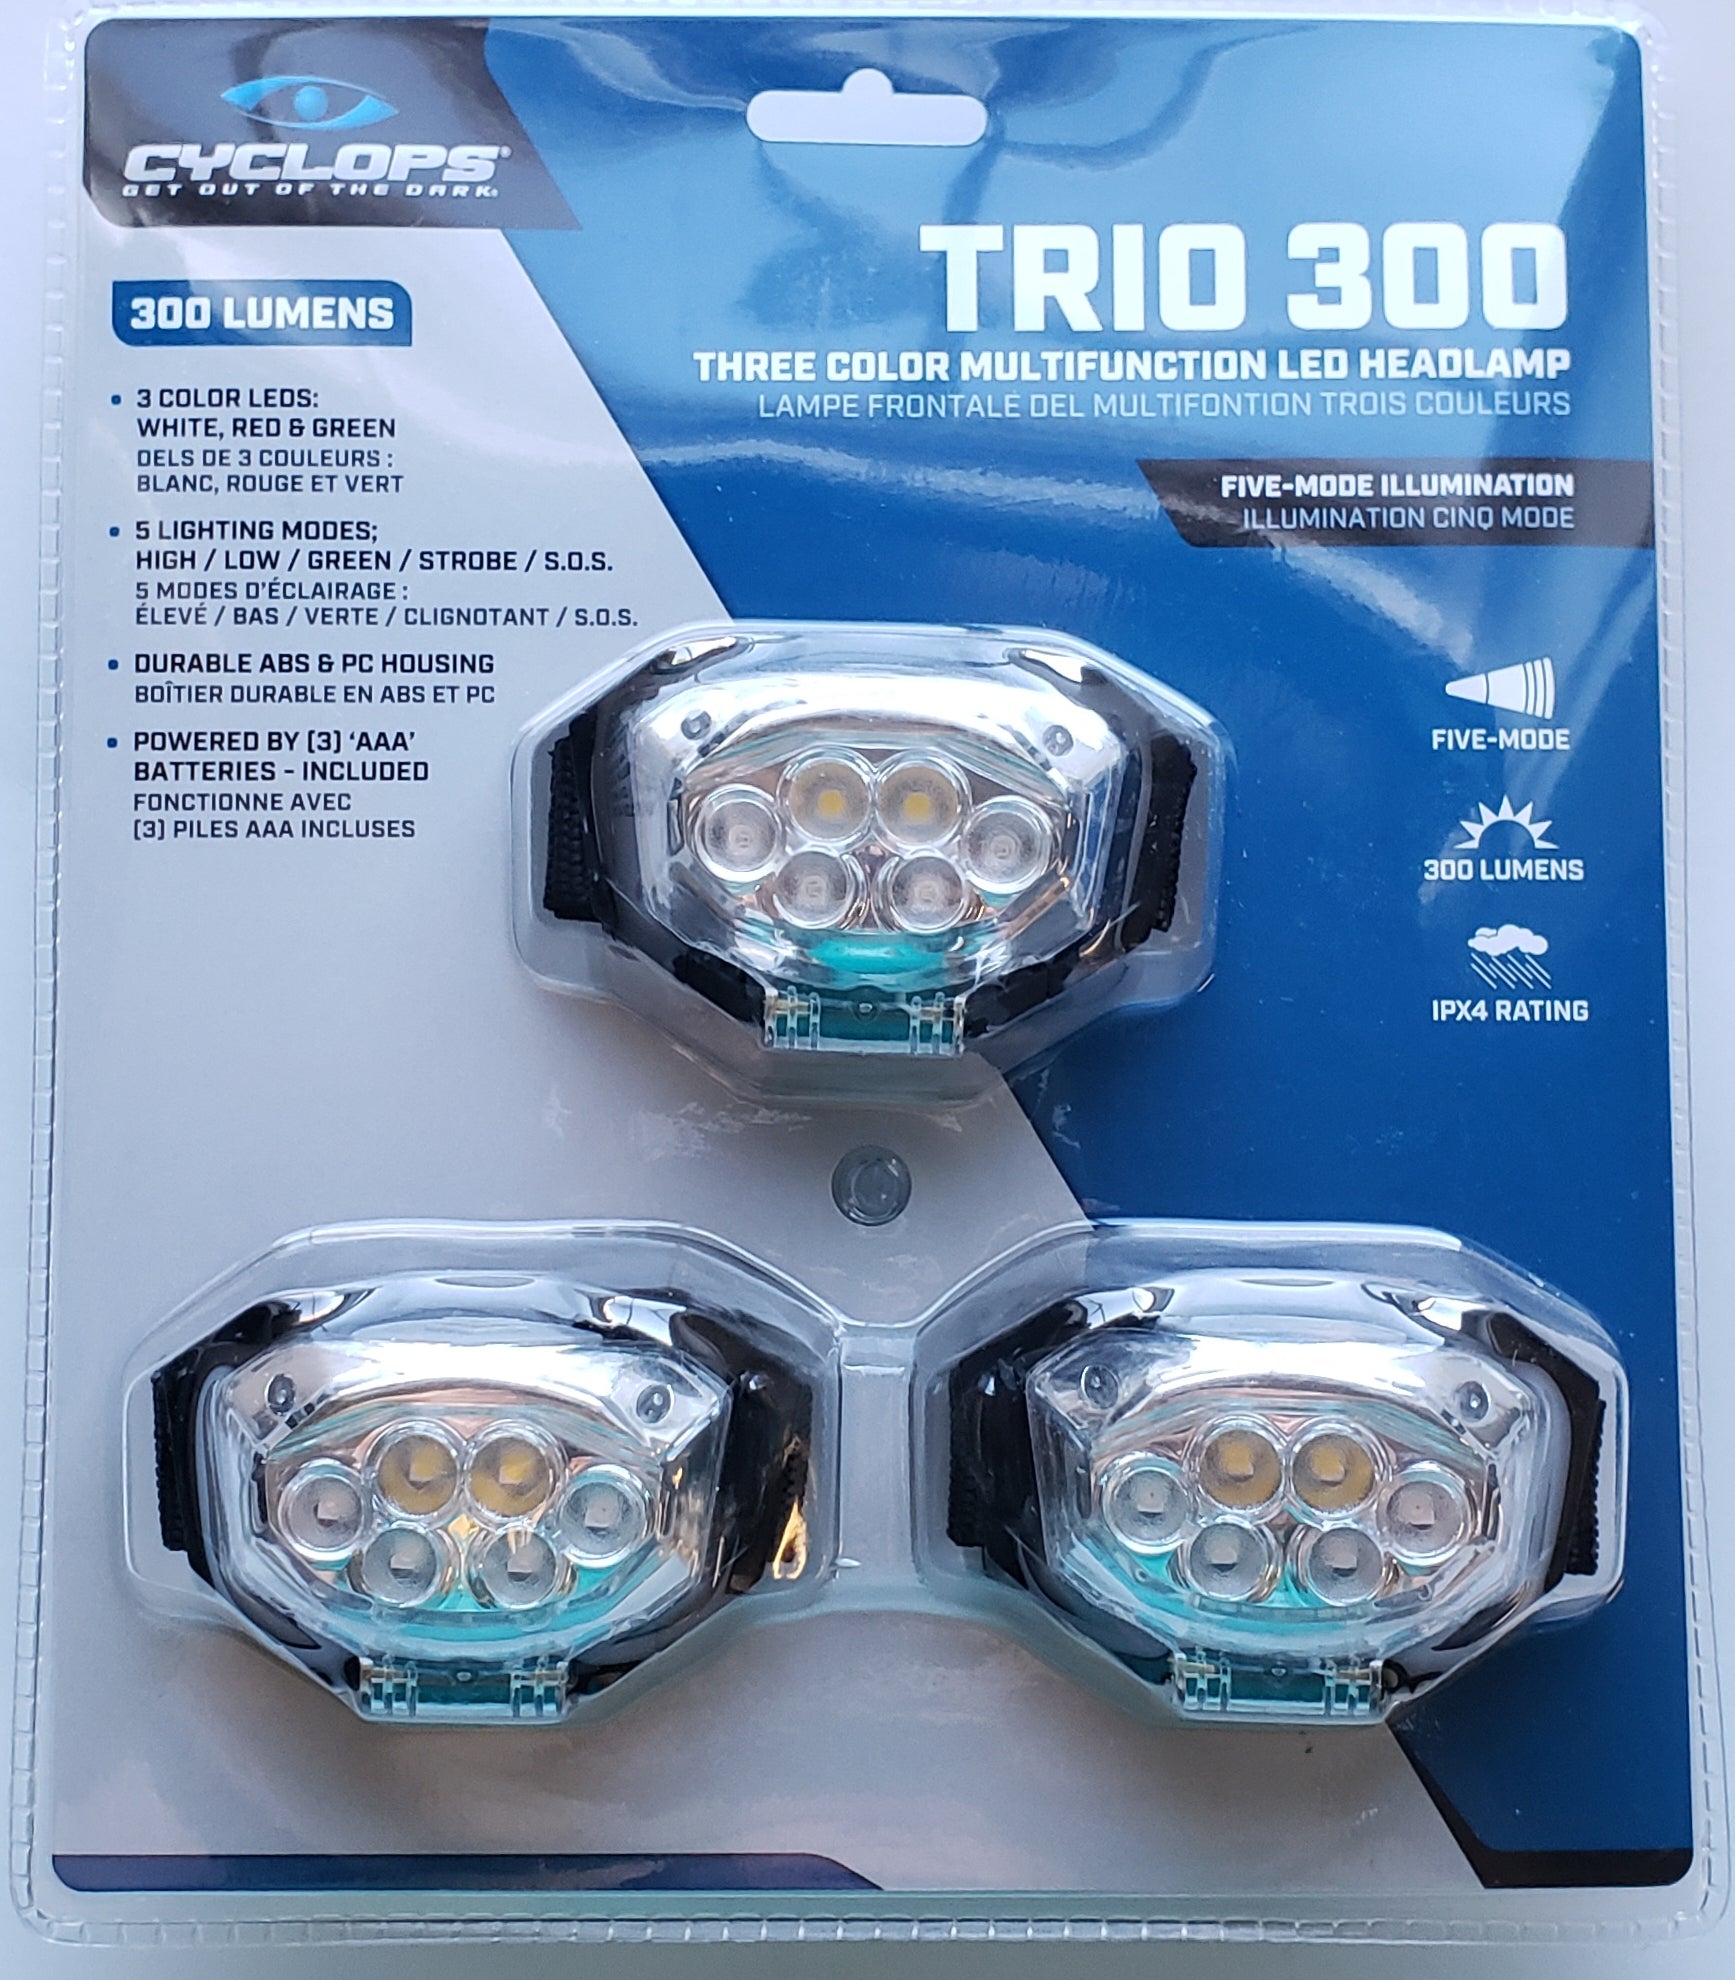 Lampe Frontale LED Headlight 3 ENERGIZER